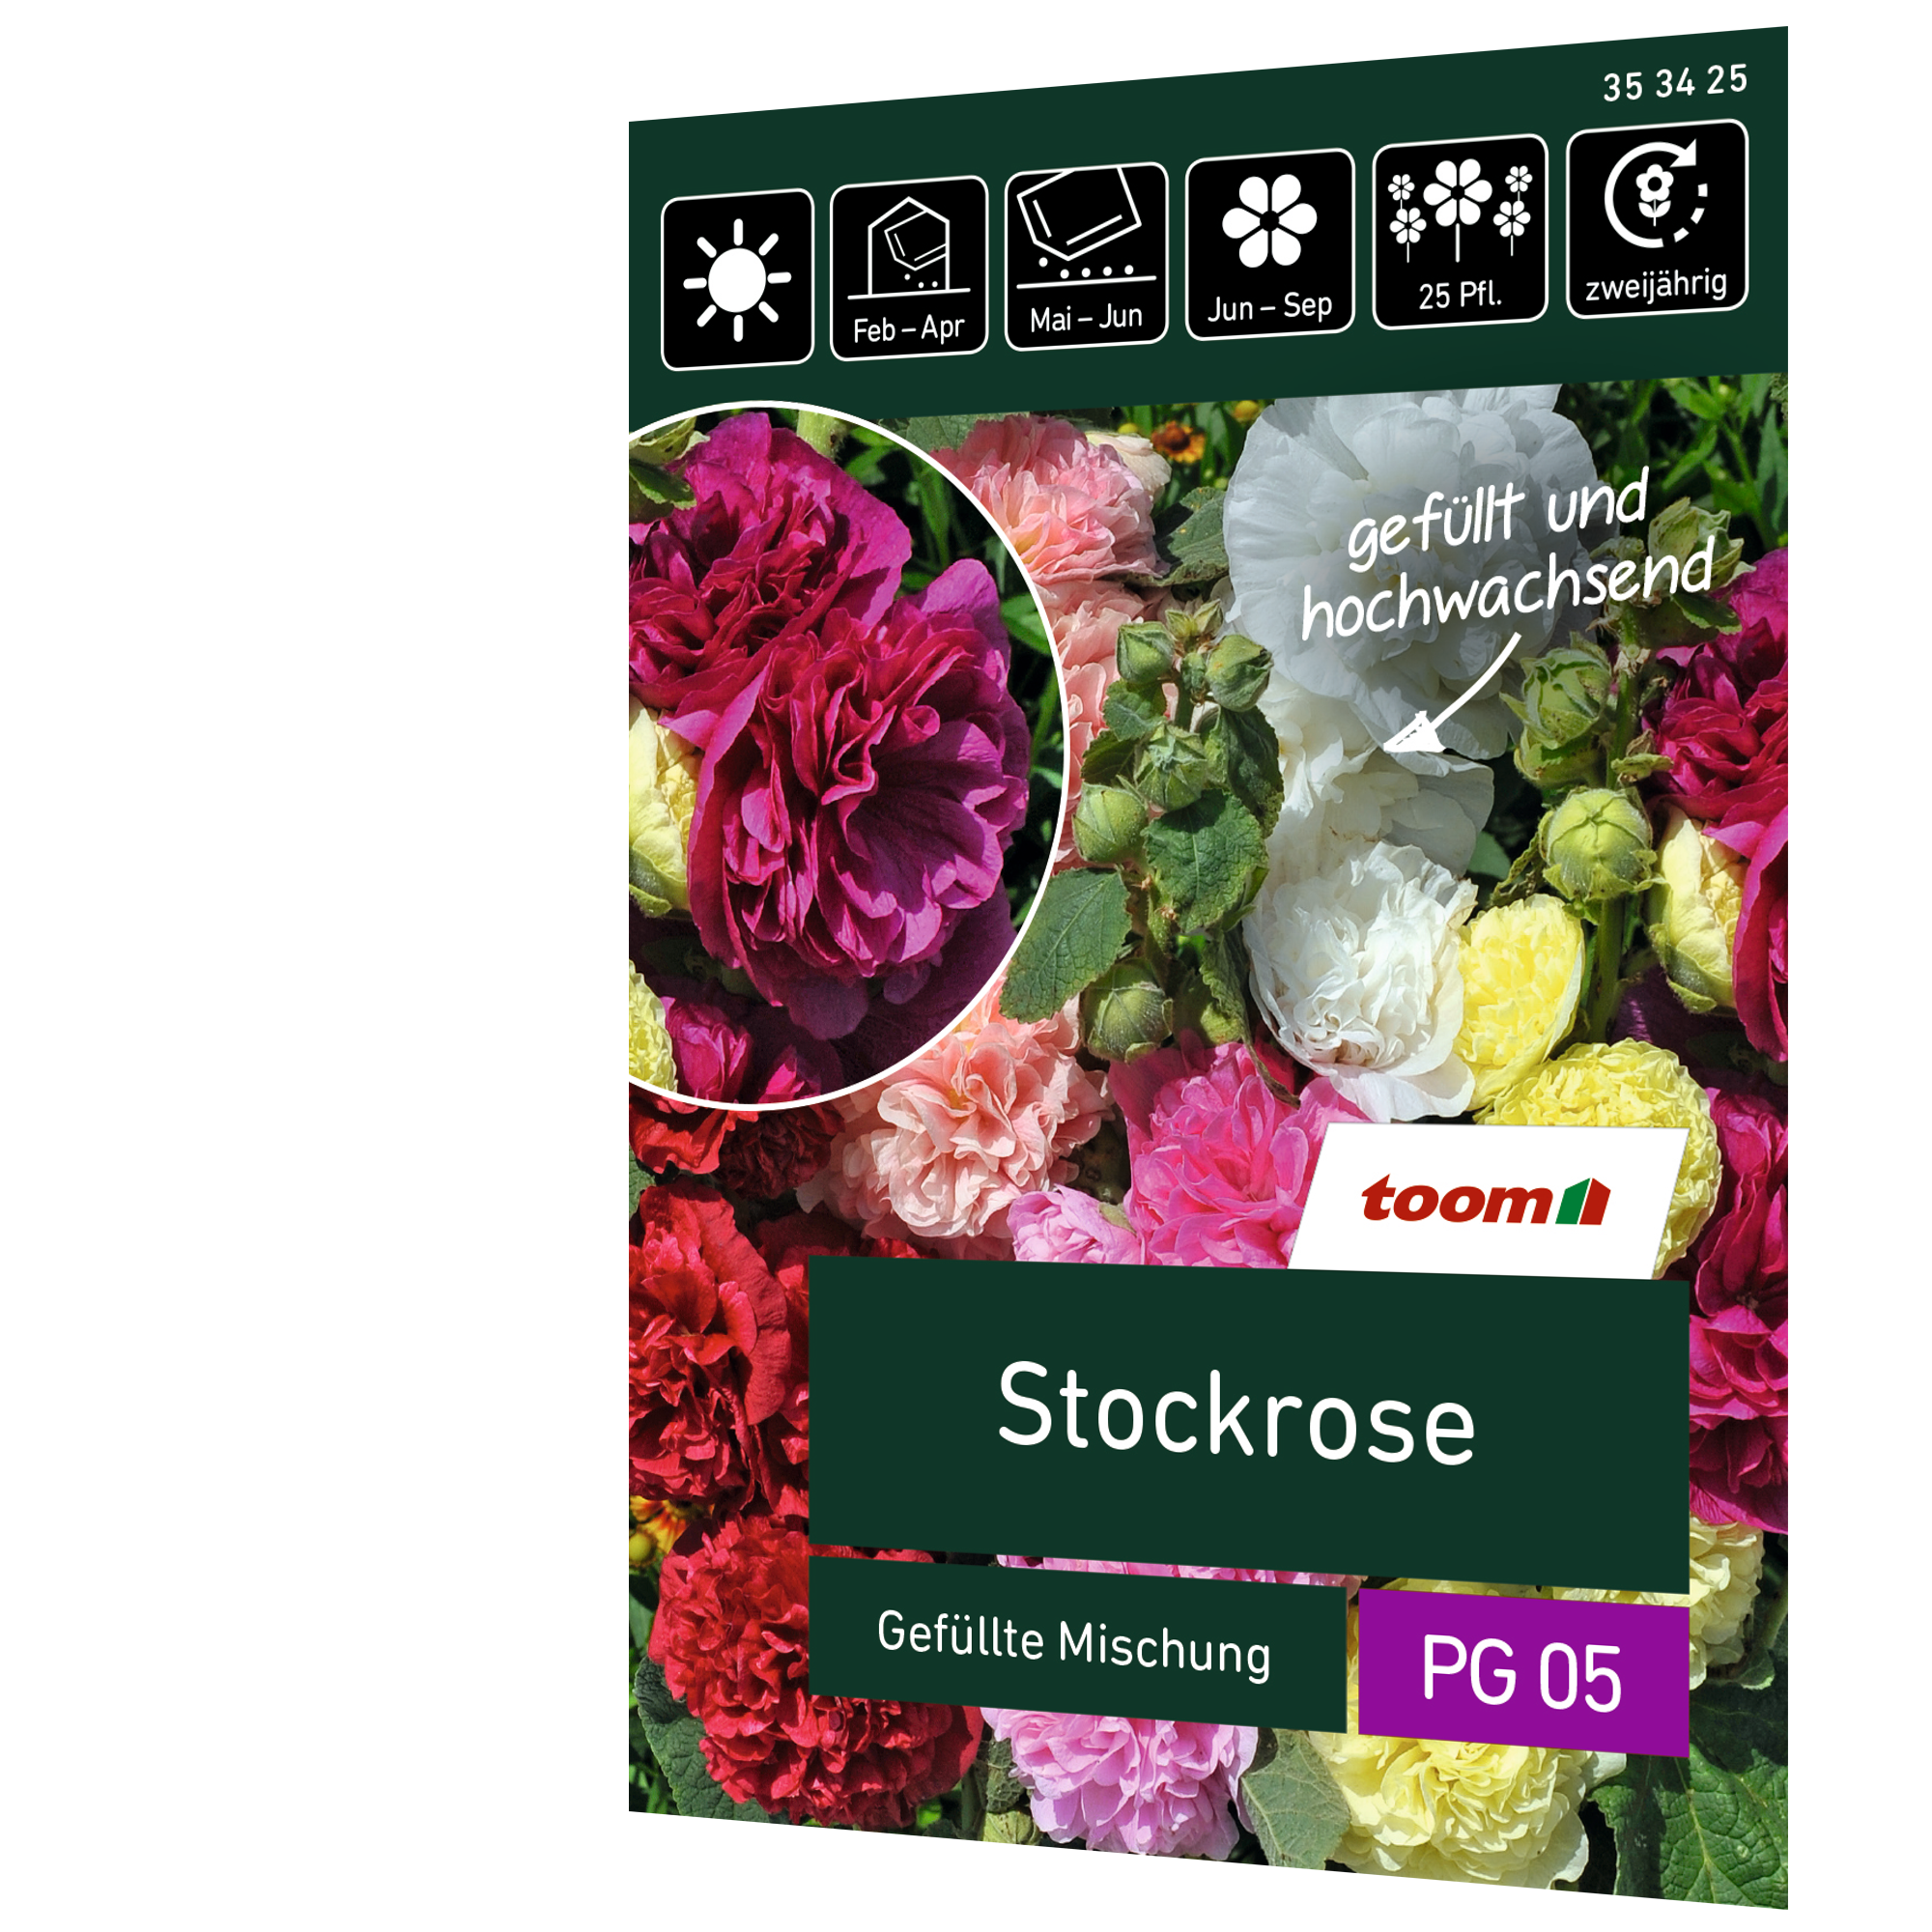 Stockrose 'Gefüllte Mischung' + product picture